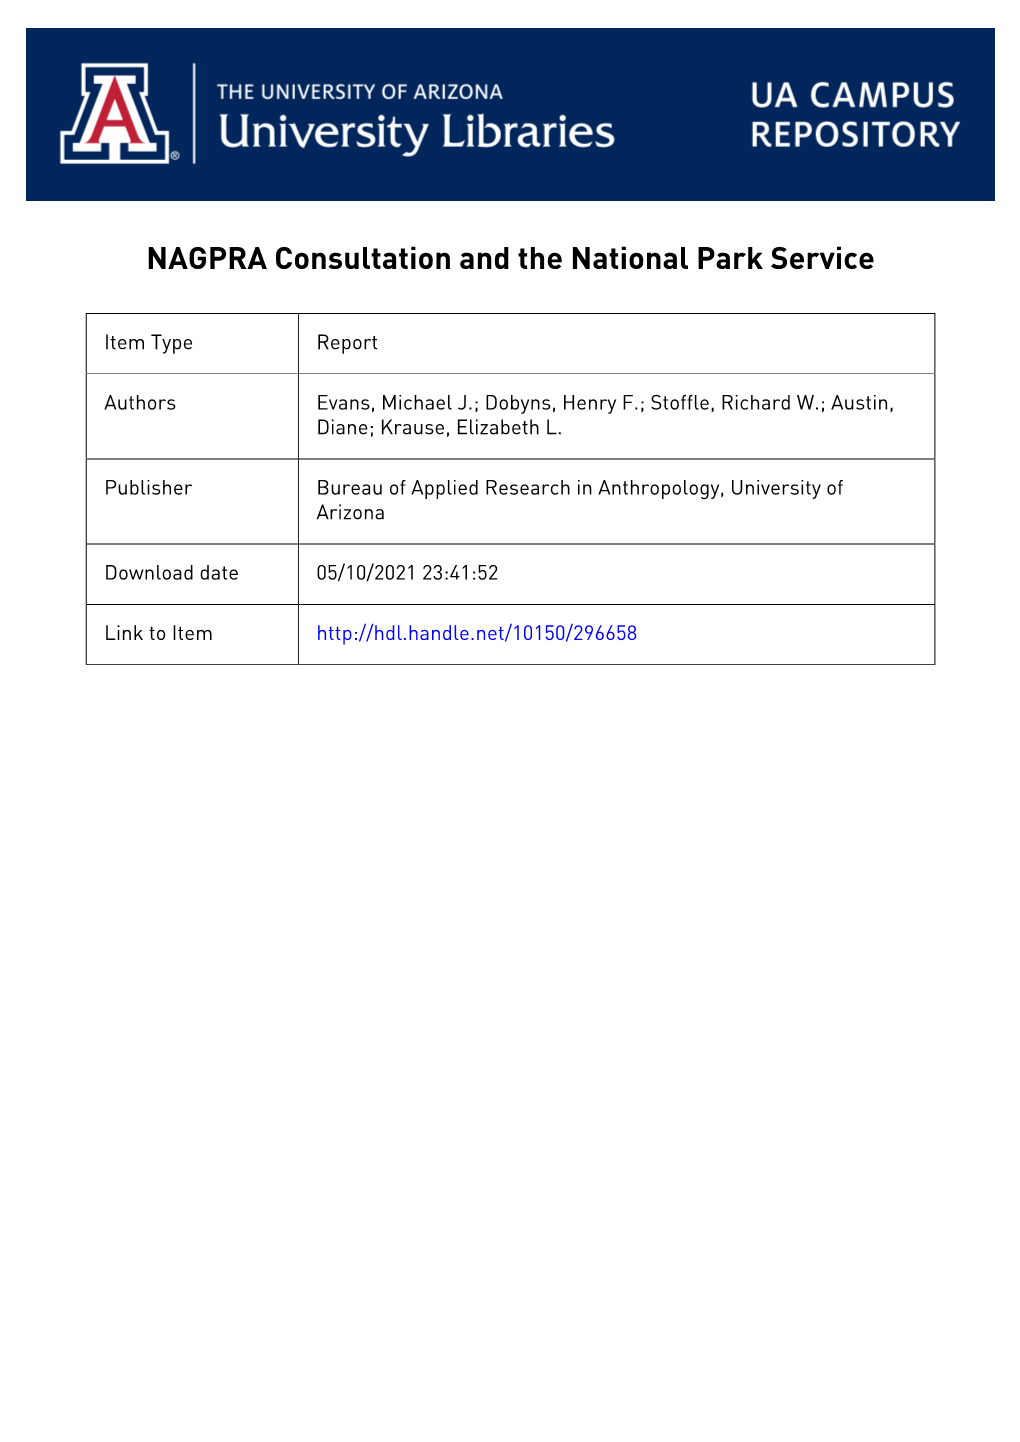 NAGPRA Consultation and the National Park Service